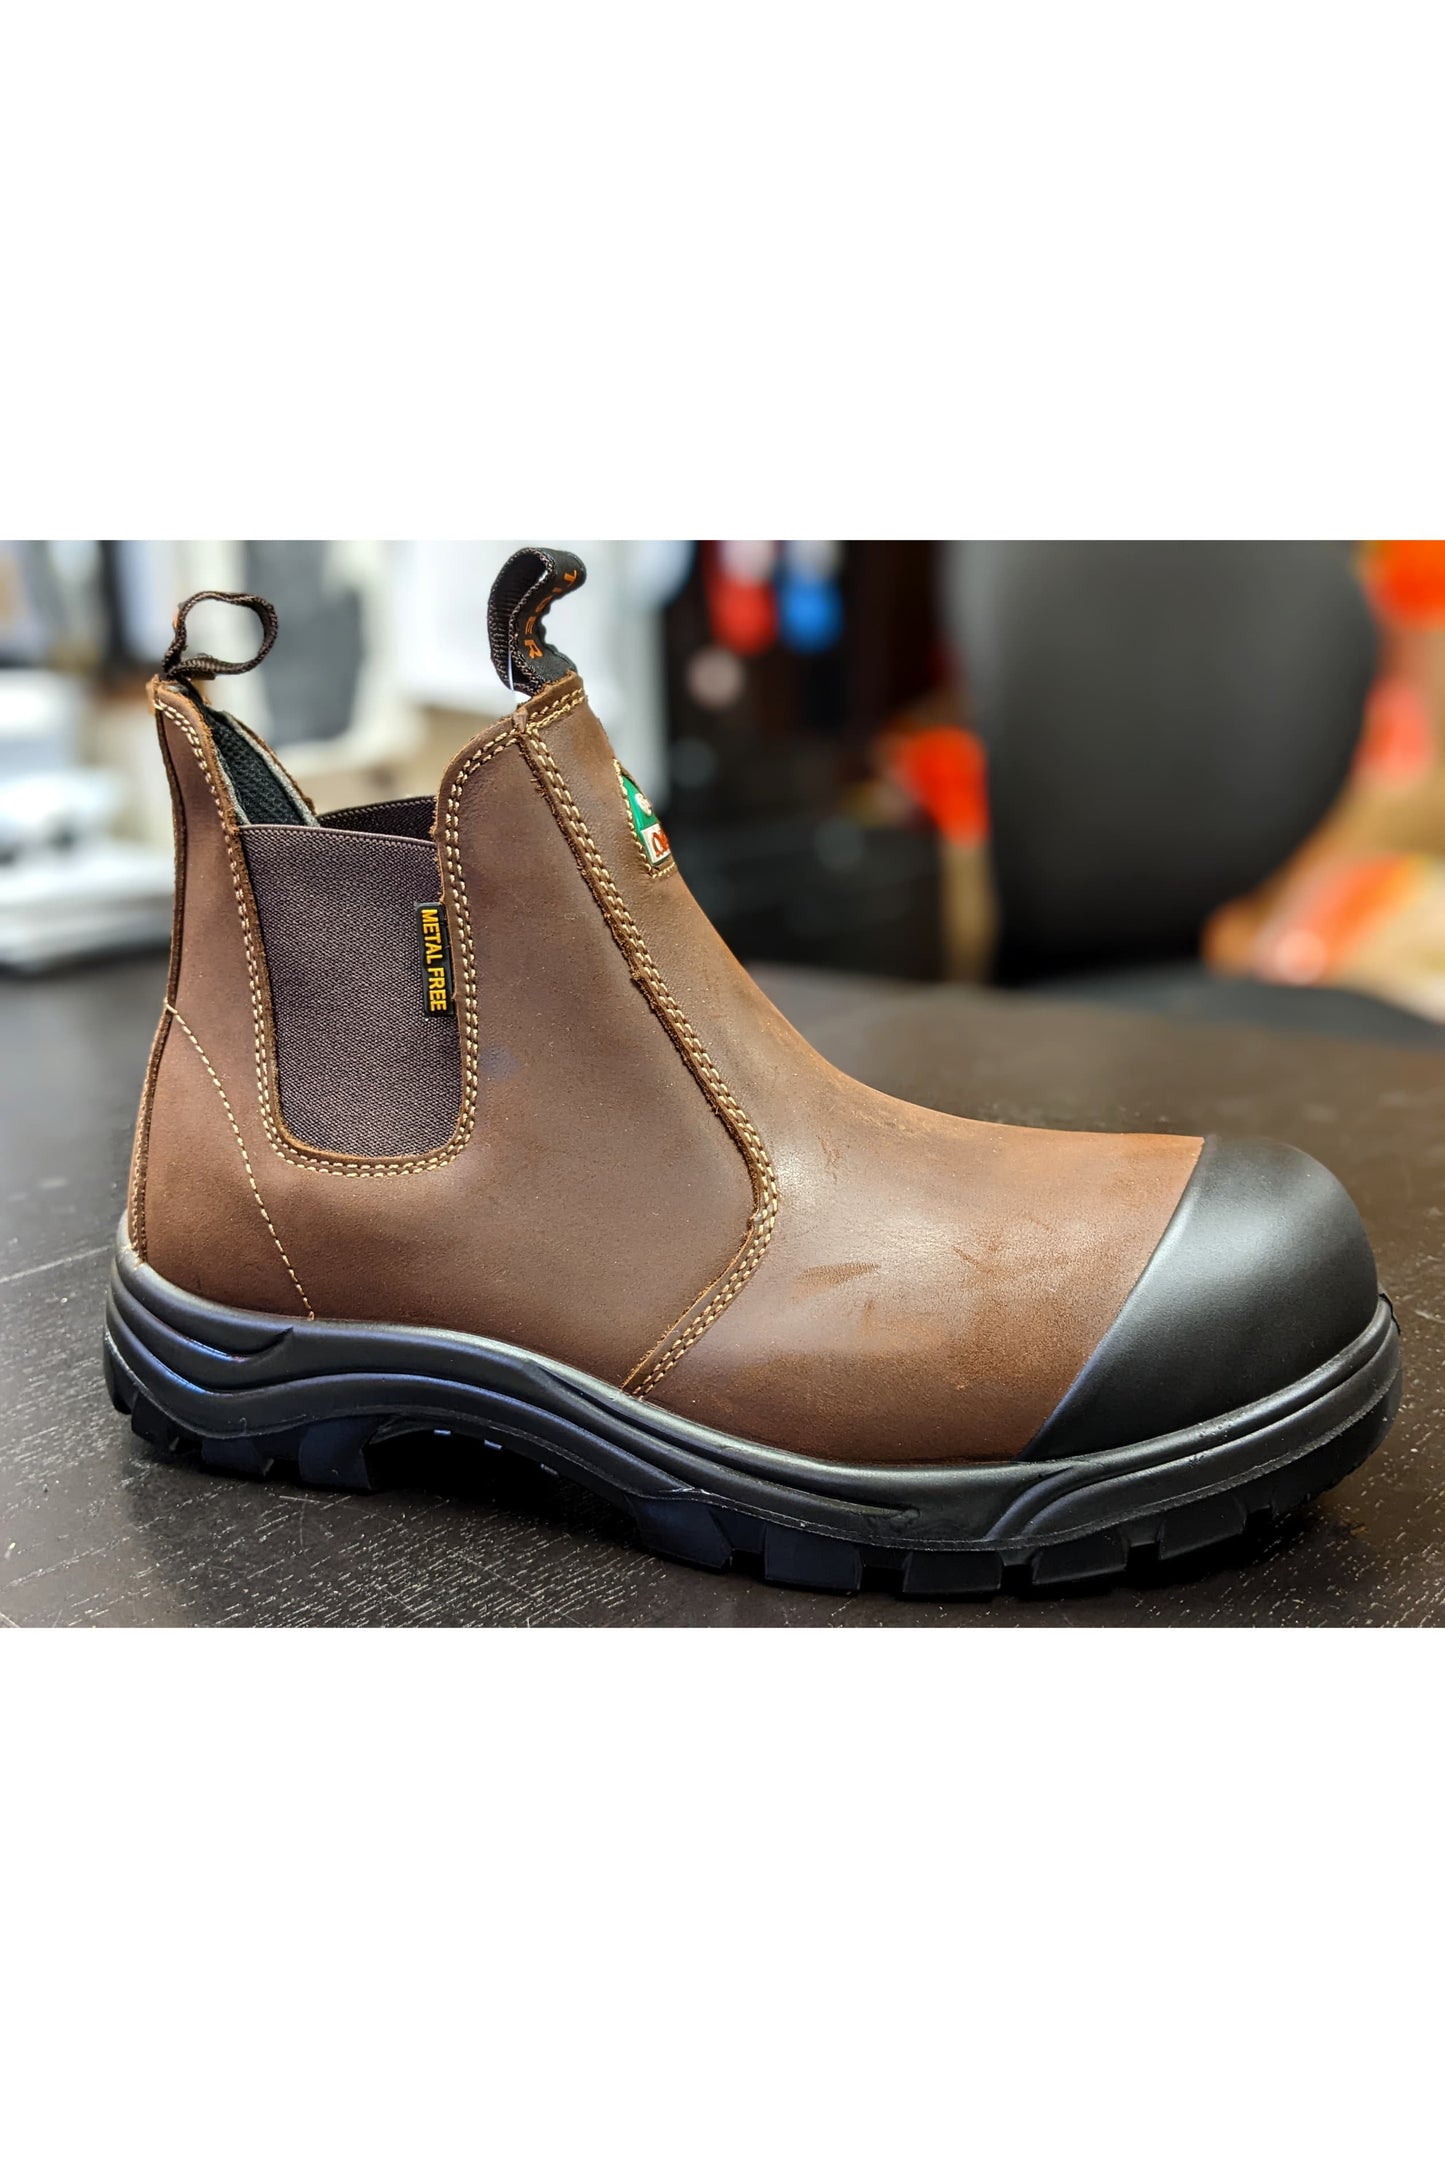 Composite Toe - Men's Lightweight Safety Boot - CSA Certified 5977C